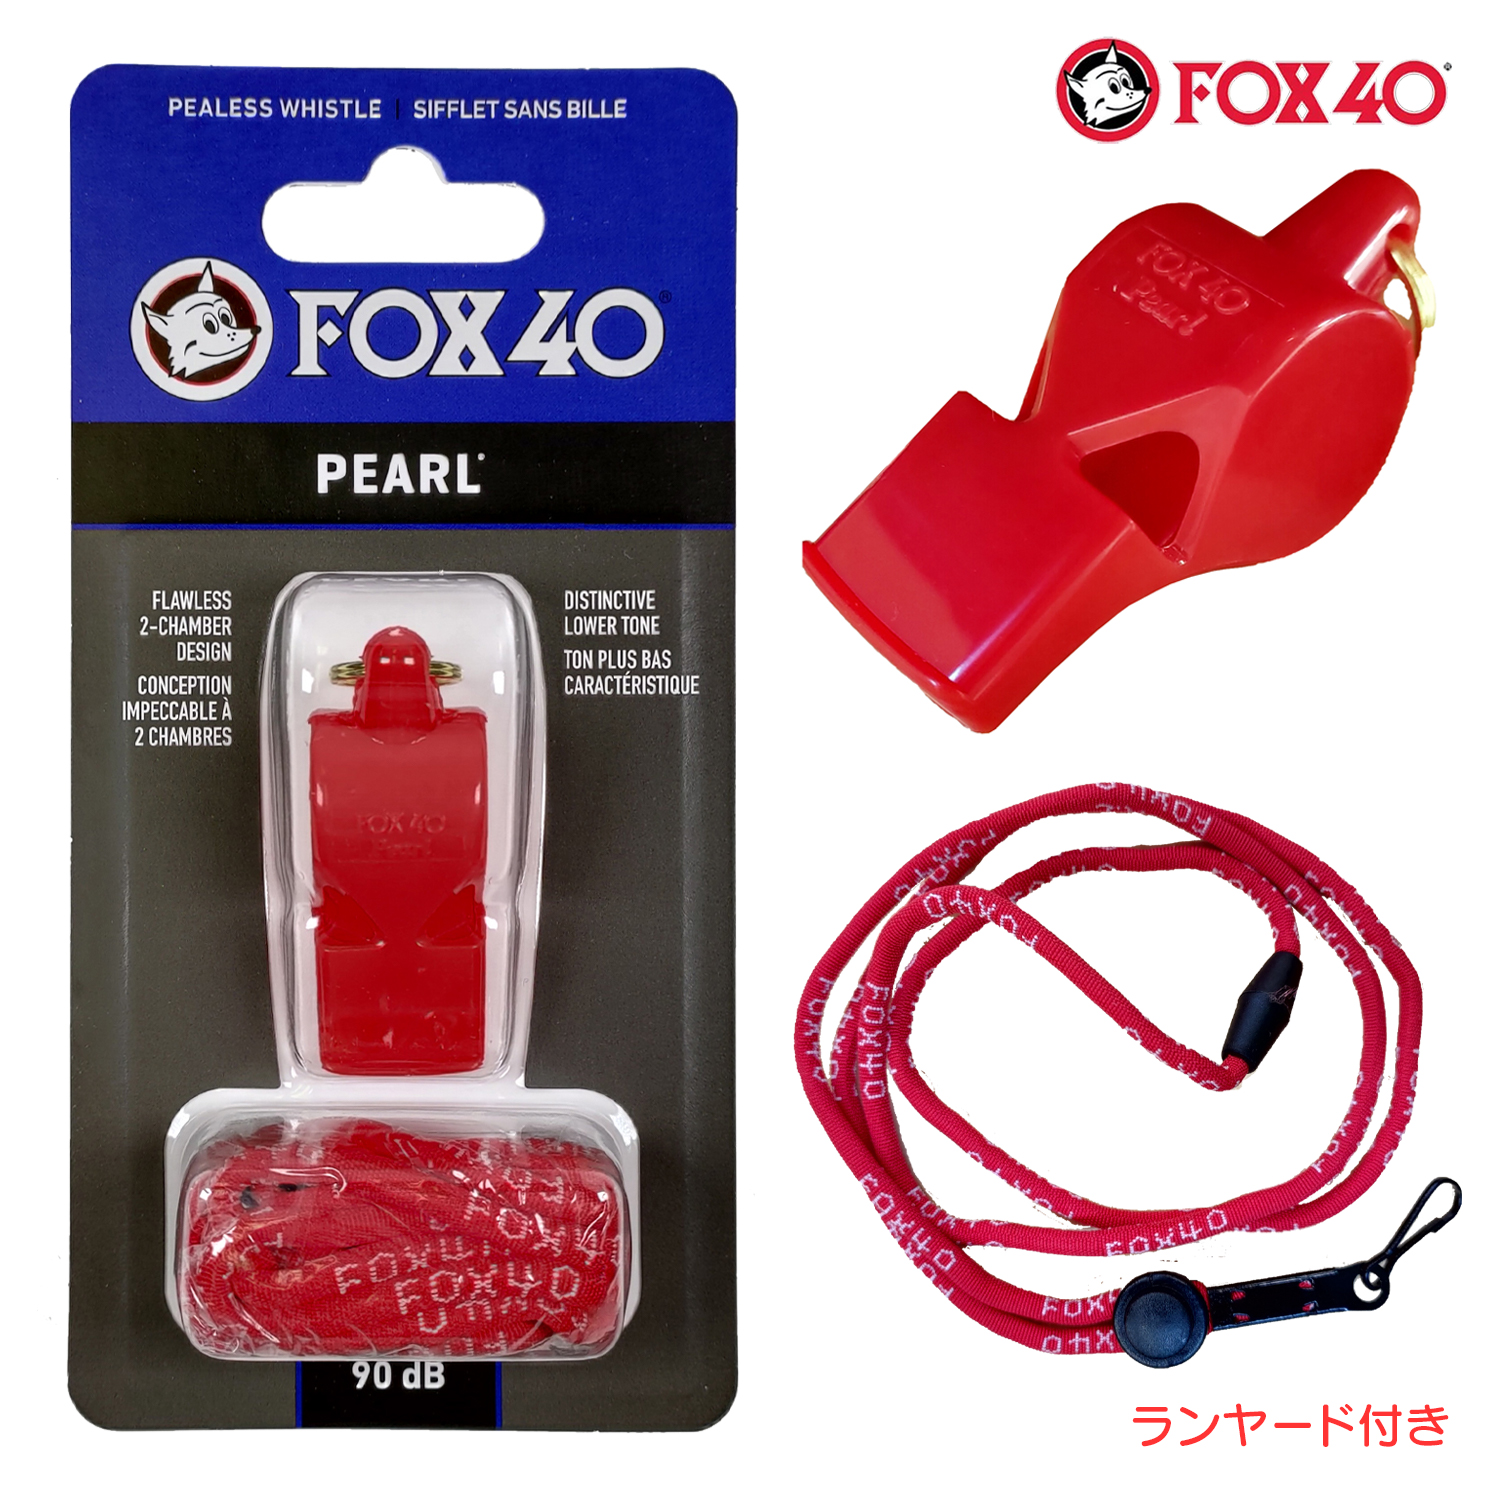 FOX40 フォックス40 Pearl ホイッスル 審判用 90db 色:レッド ランヤード付属 コルク玉不使用ピーレスタイプ made in Canada